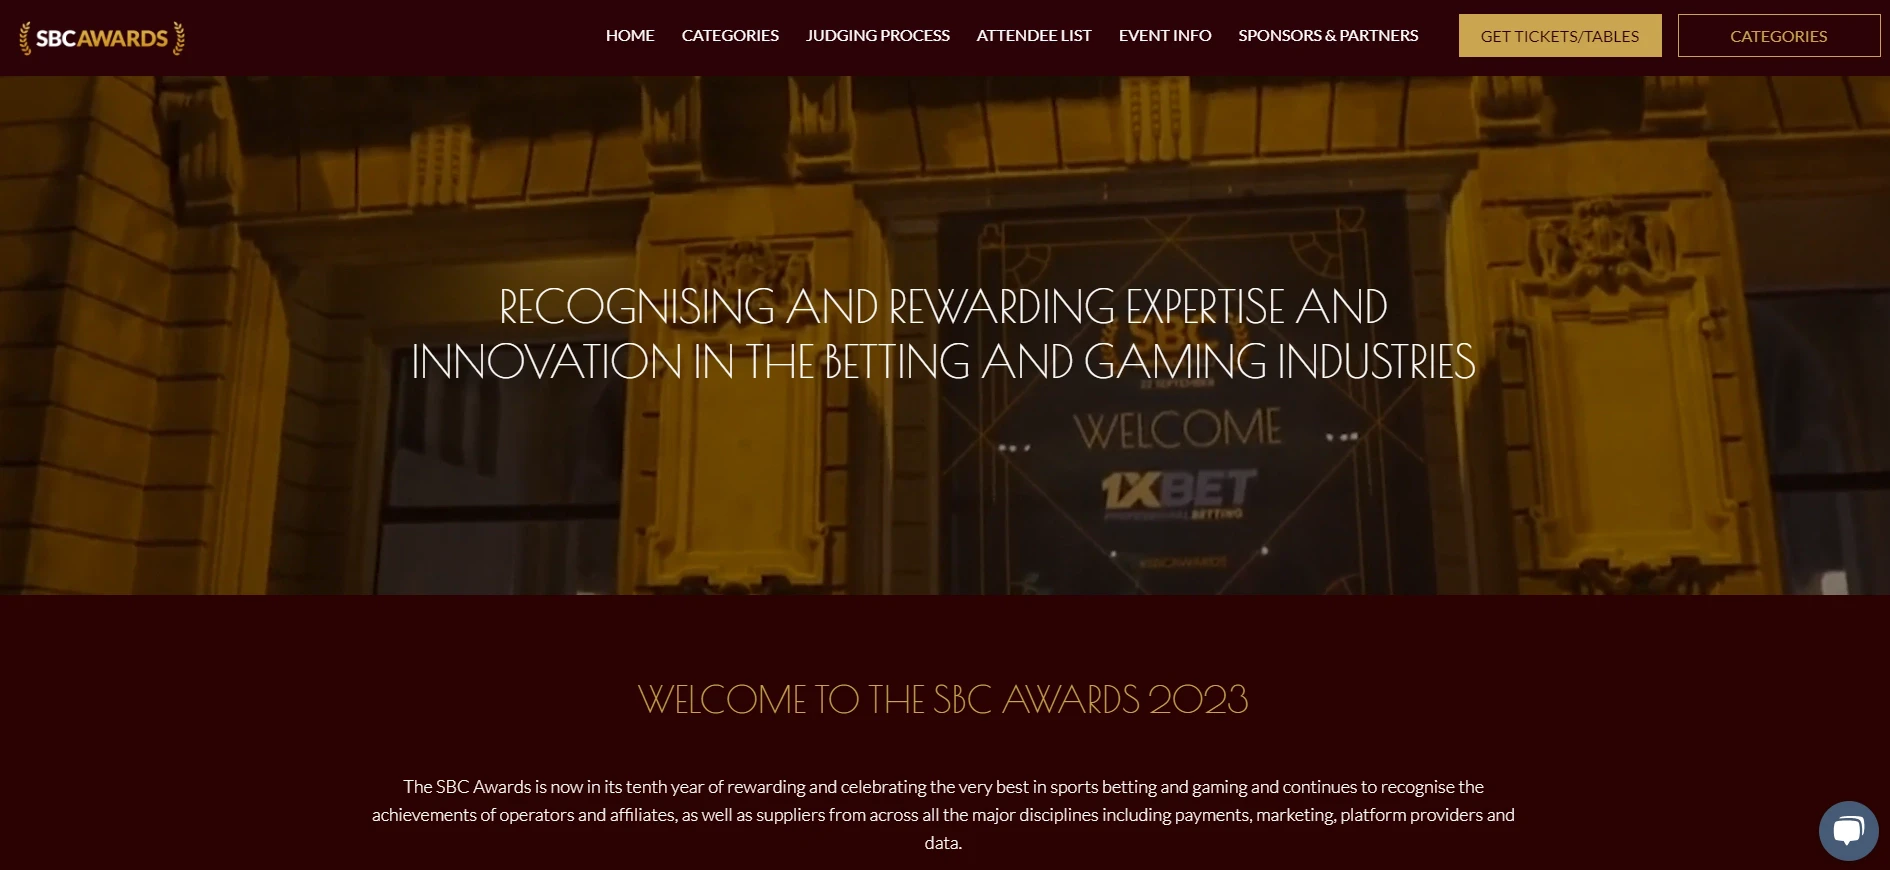 SBC Awards Home Page